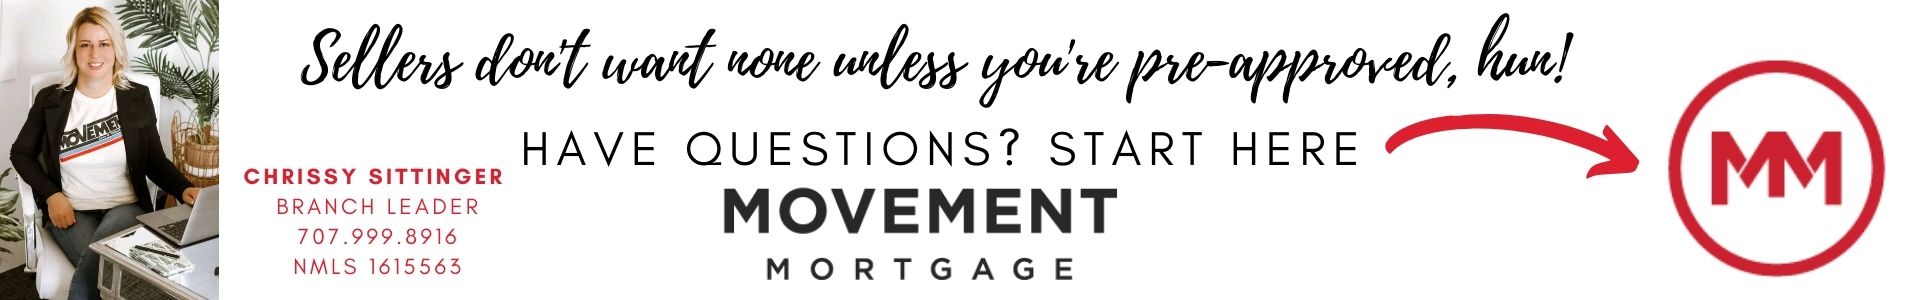 Chrissy-Sittinger-Movement-Mortgage-Website-Banner